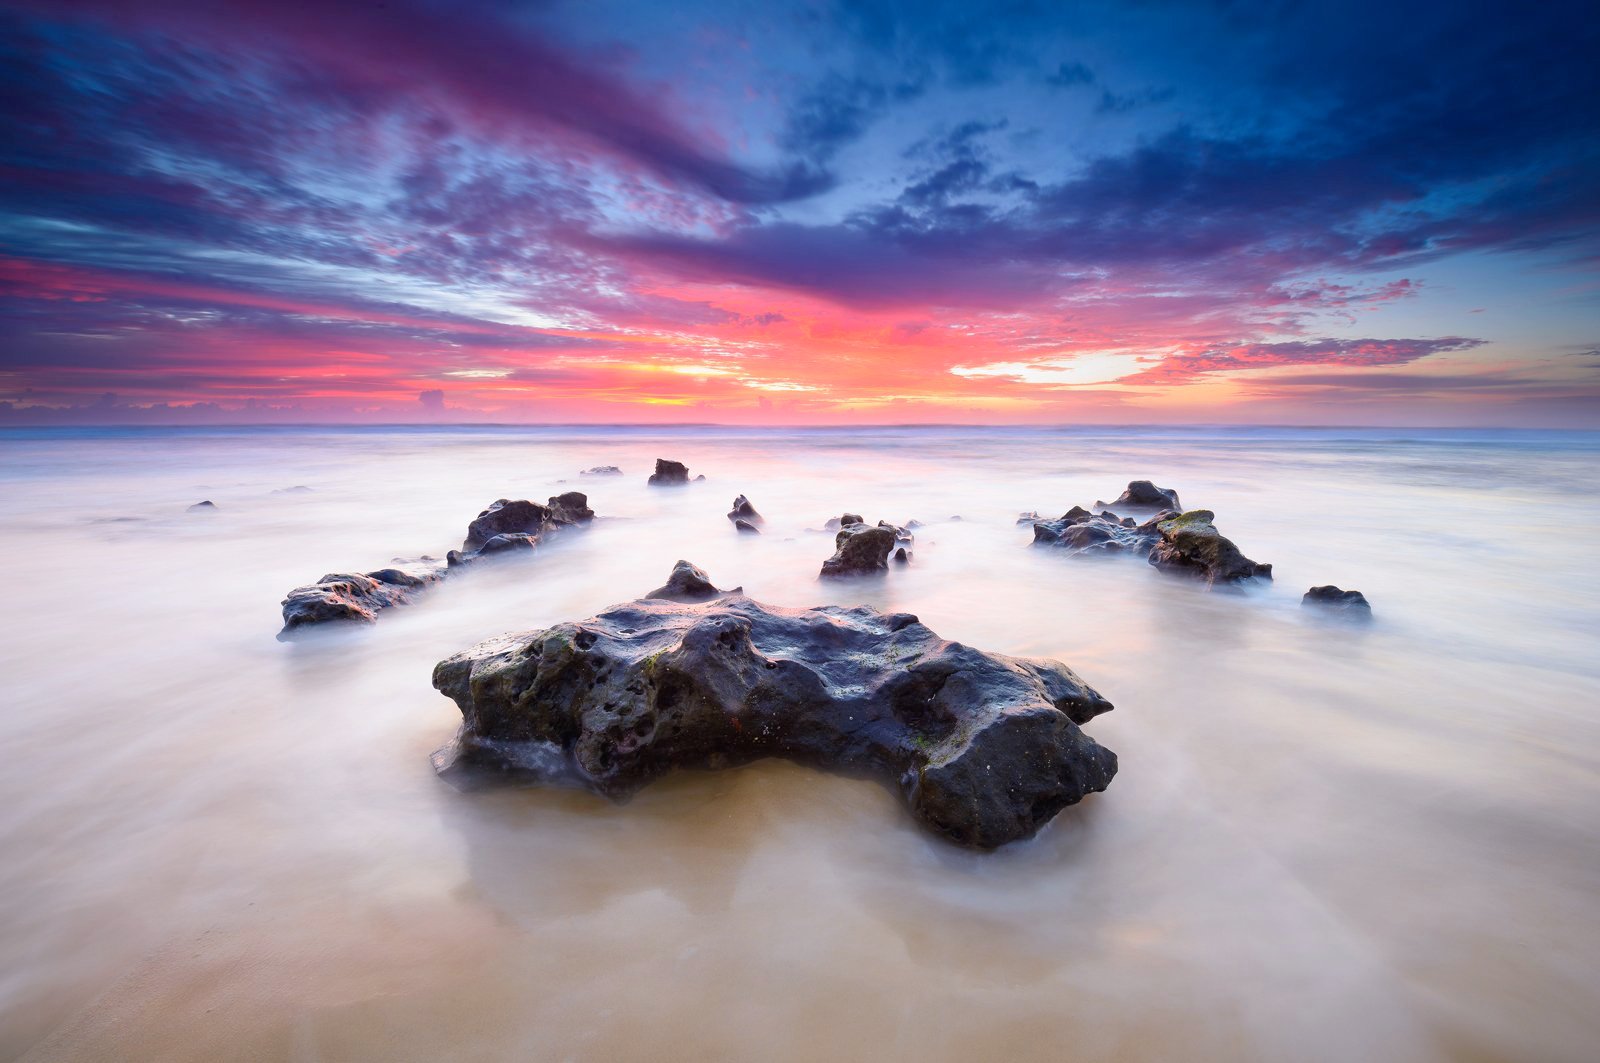 Sunrise Skies - Coolum Beach - Dave Wilcock Photography